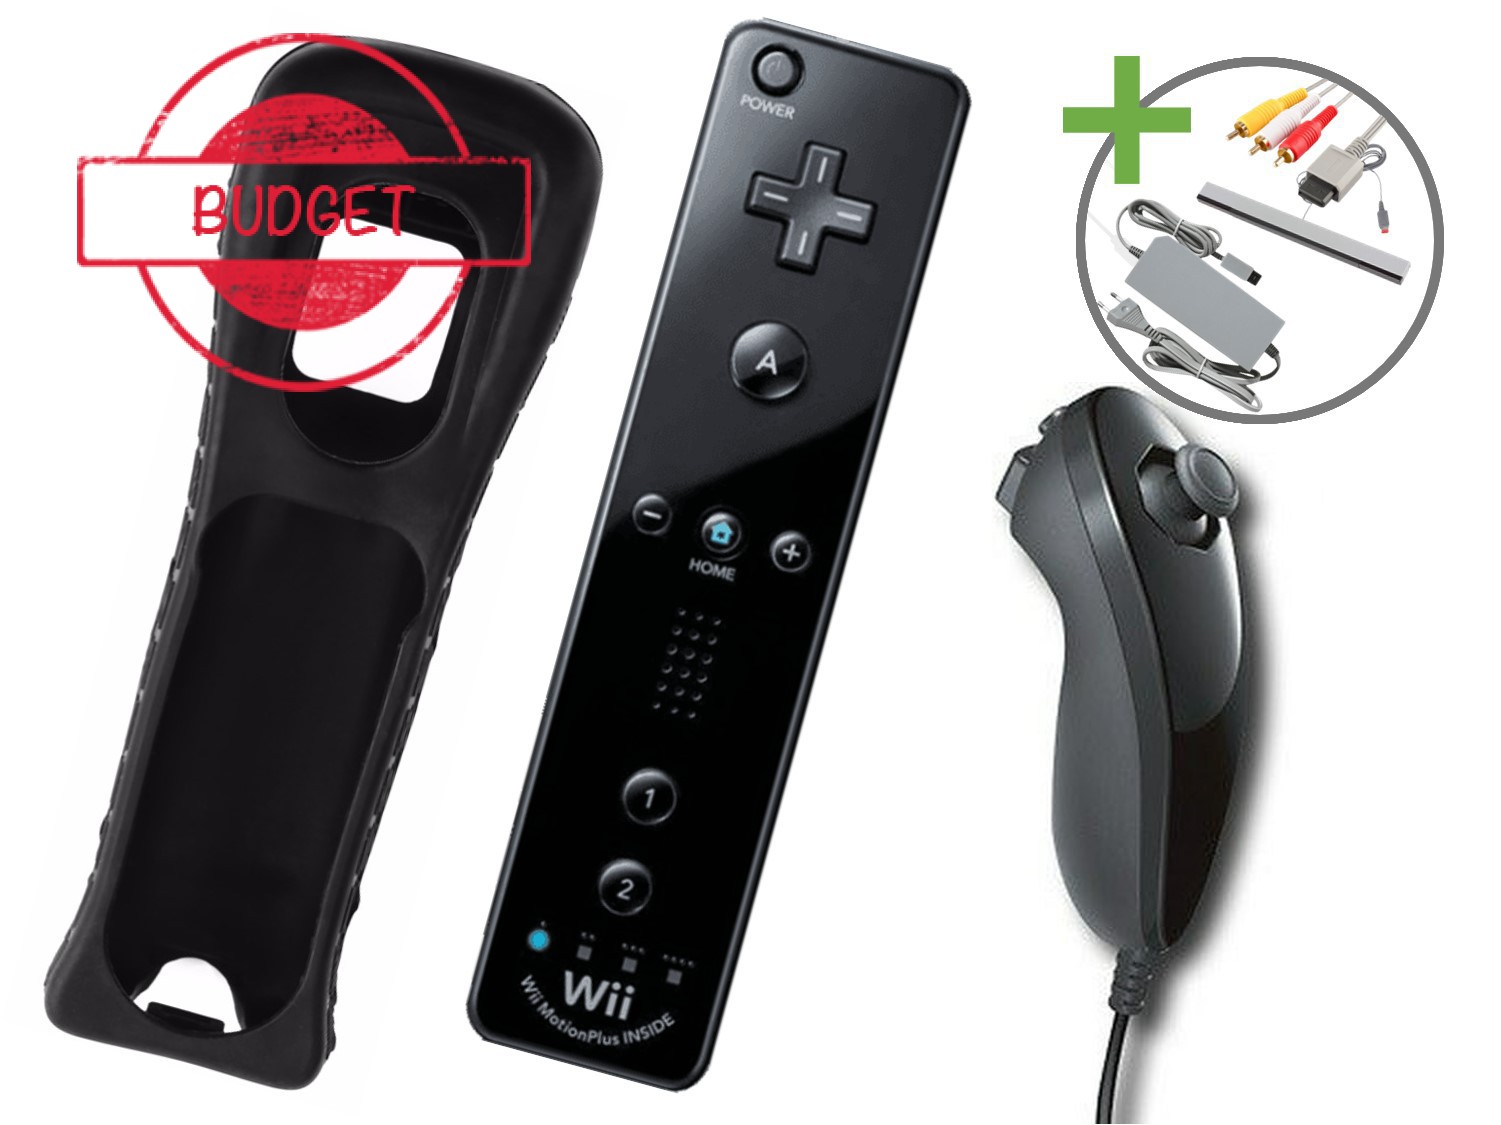 Nintendo Wii Starter Pack - Motion Plus Black Edition - Budget - Wii Hardware - 3